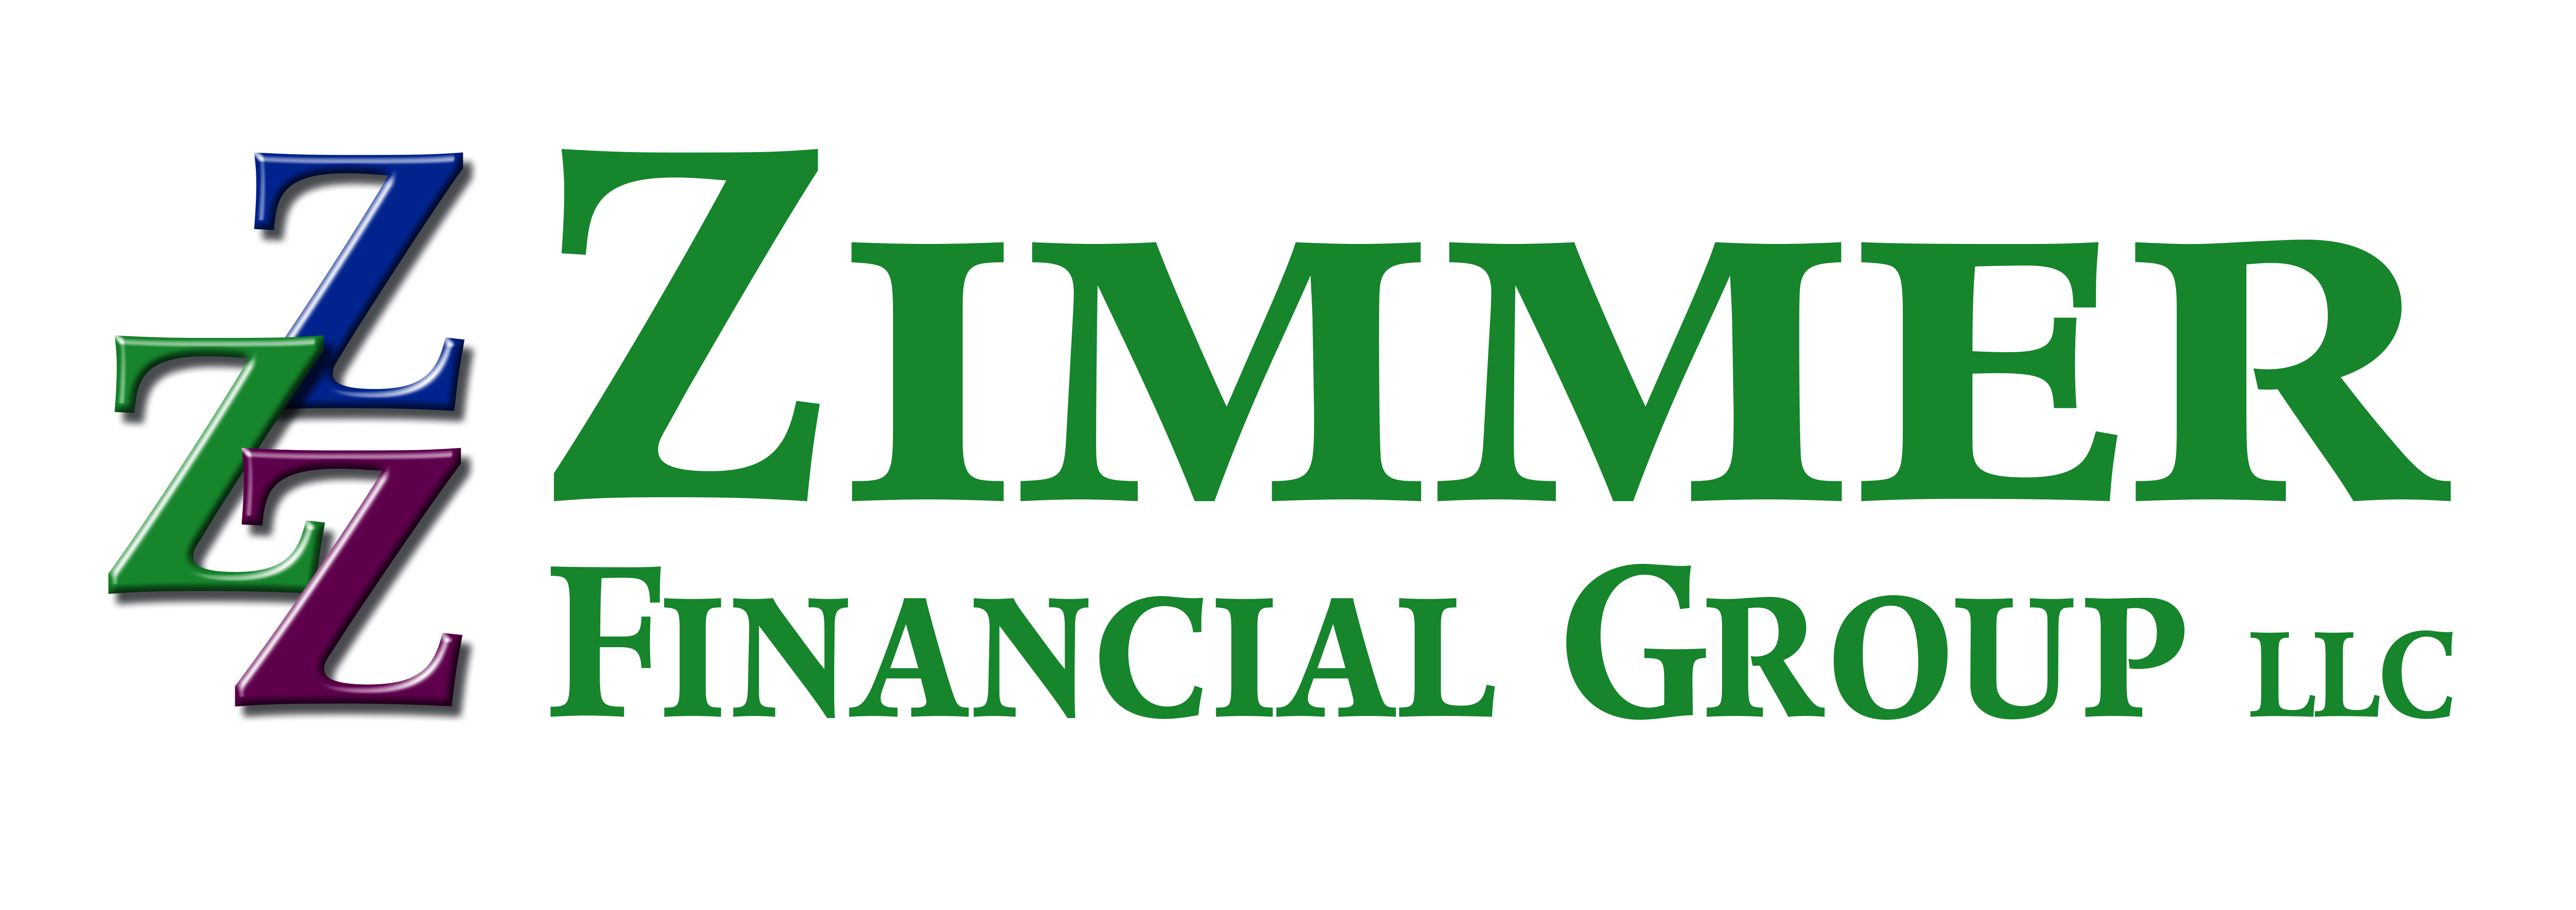 Zimmer Financial Group